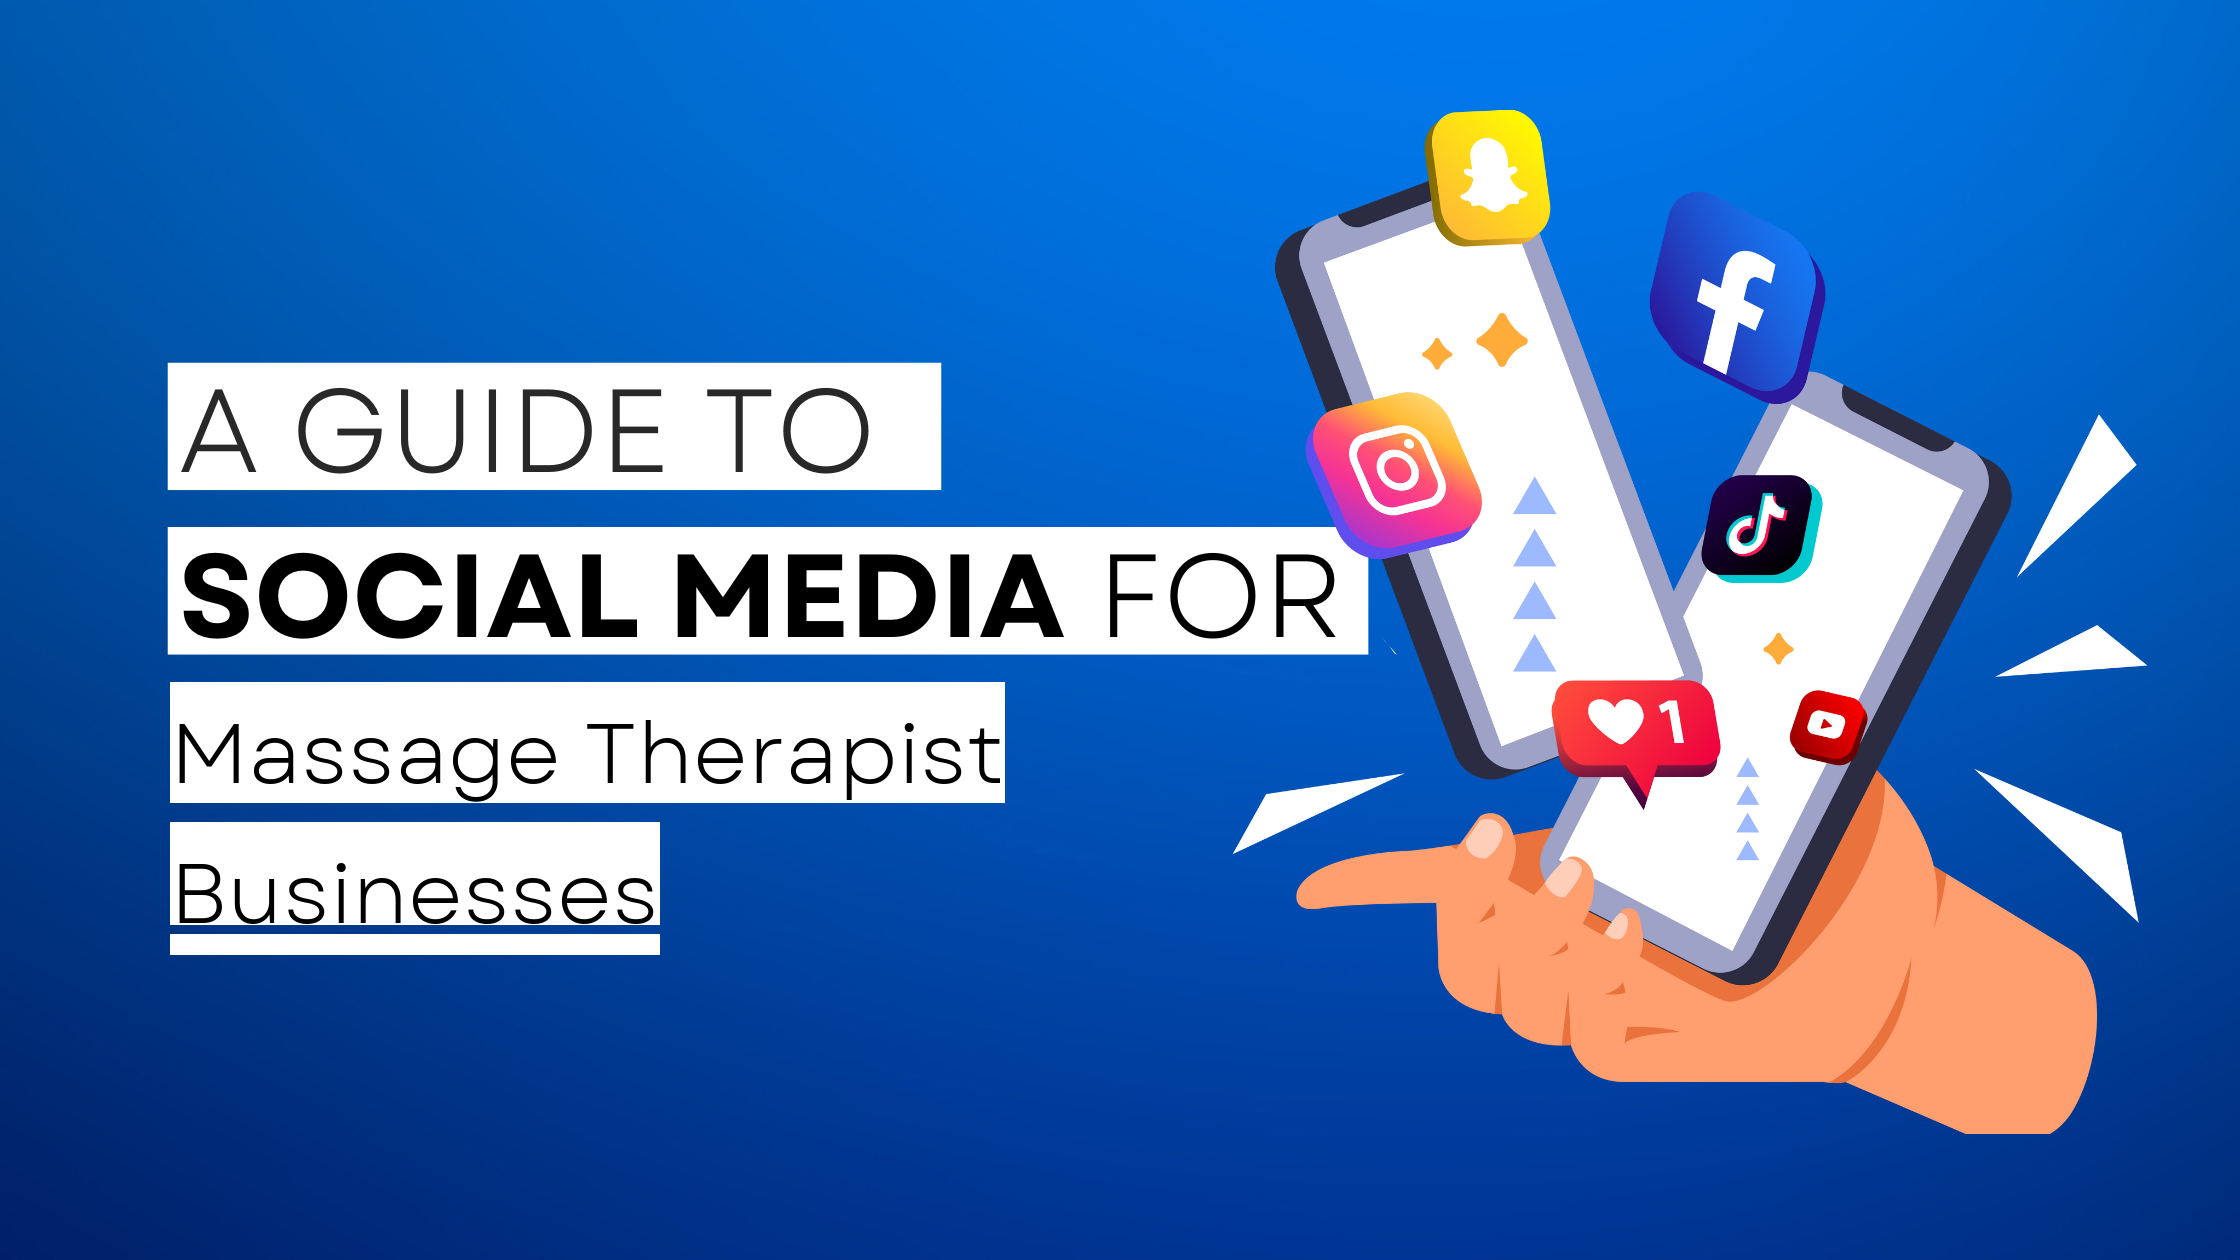 How to start Massage Therapist on social media